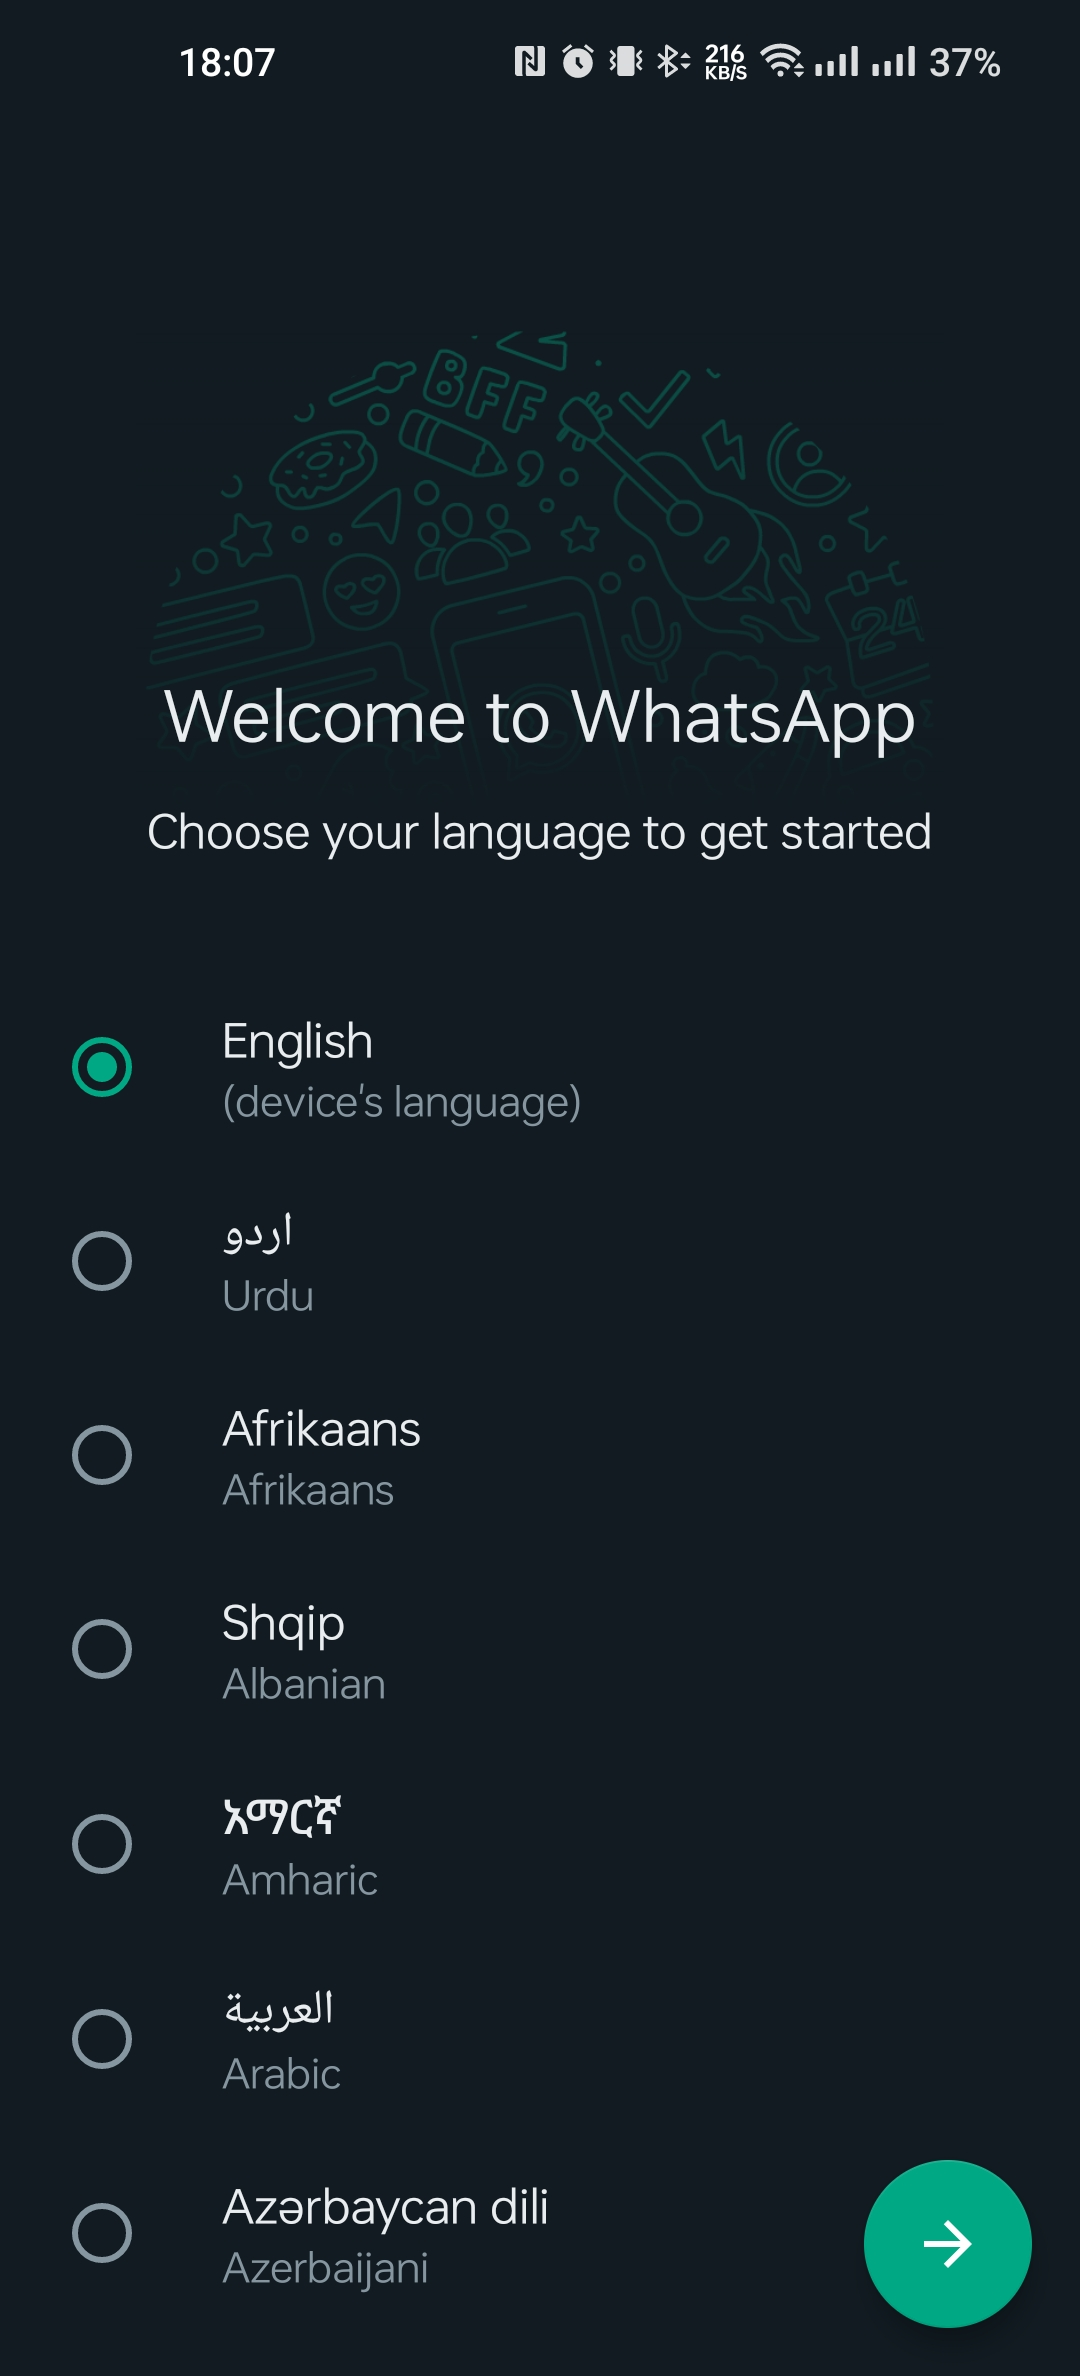 OG Whatsapp language setup image